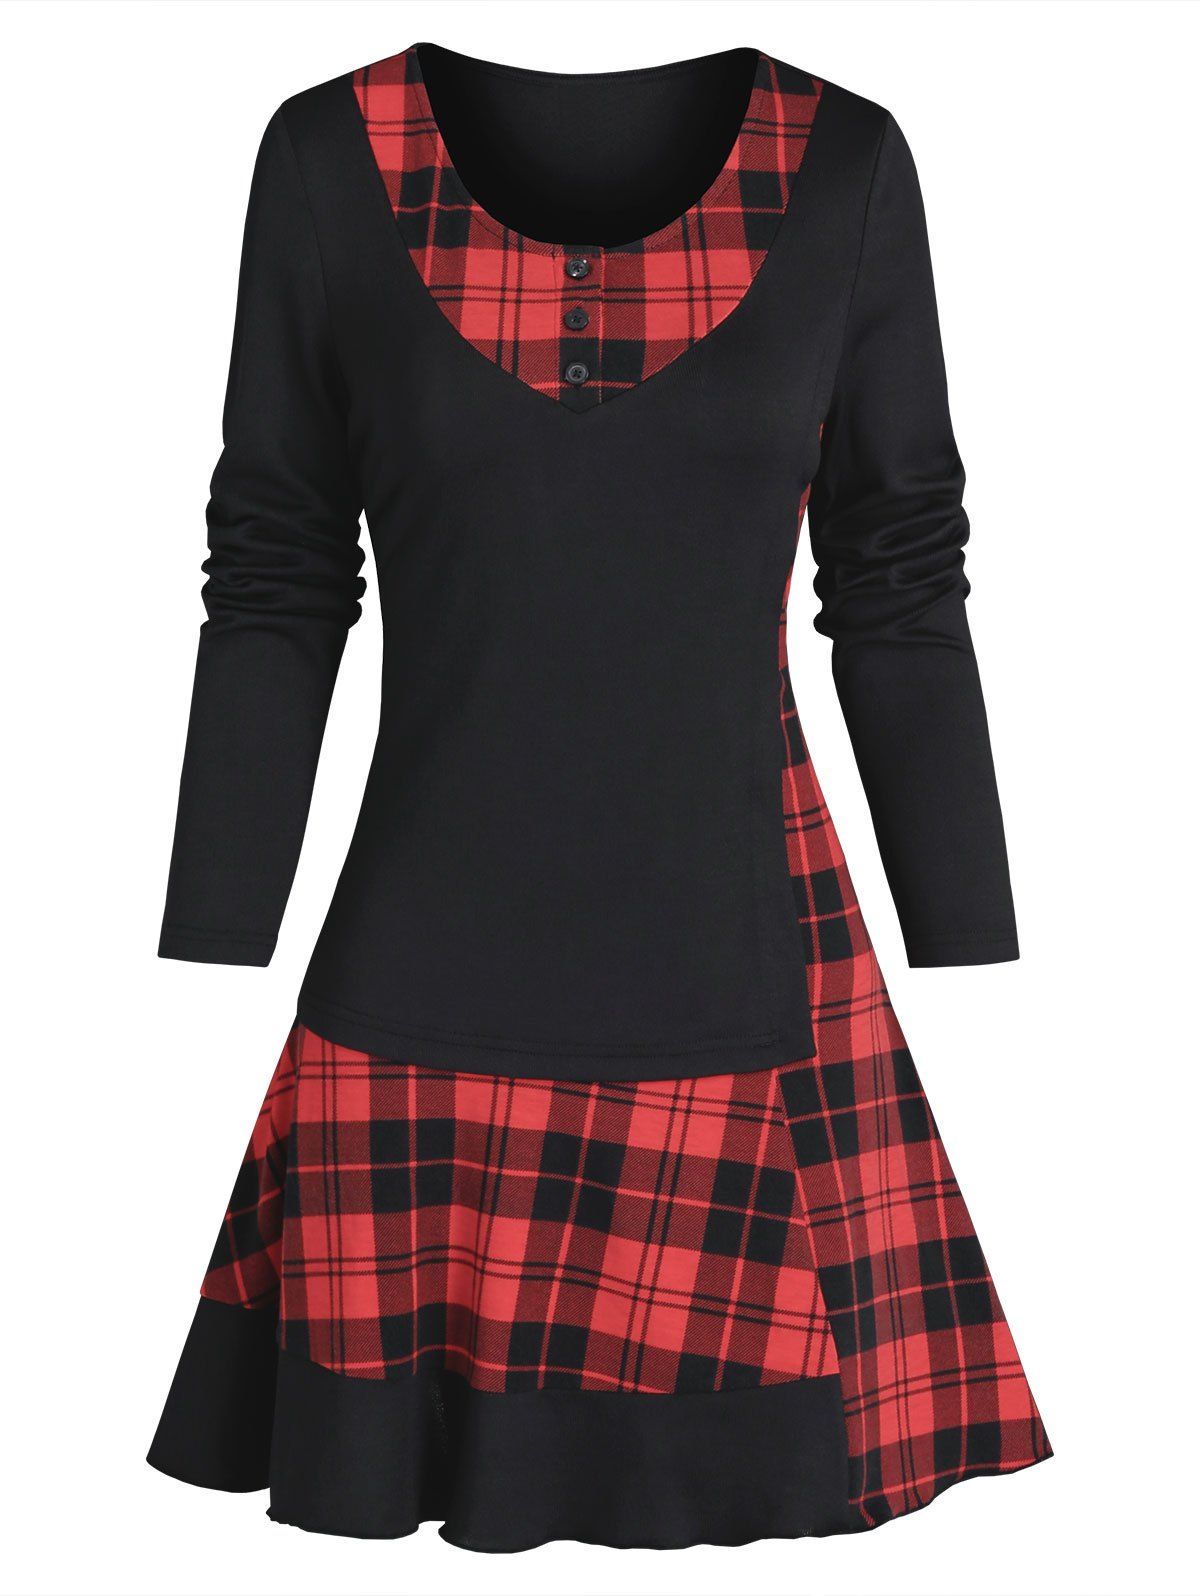 Plaid 2 In 1 A Line Mini Dress Vintage Long Sleeve Mock Button Casual Dress - BLACK M